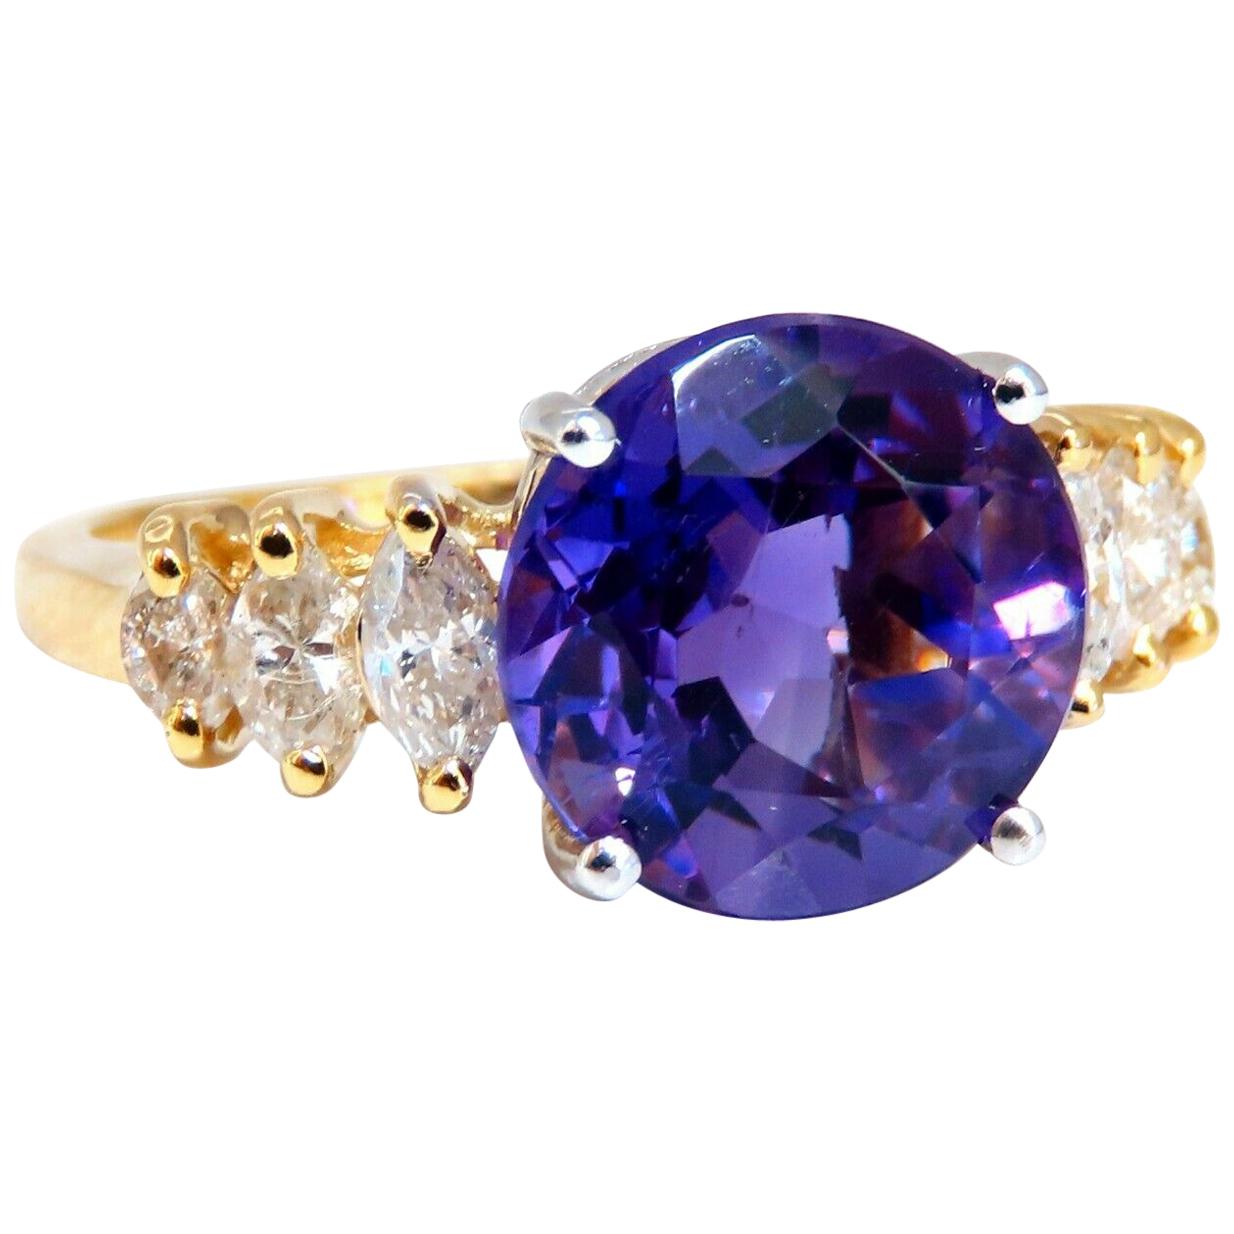 4.45 Carat Natural Round Vivid Purple Amethyst Diamond Ring 14 Karat